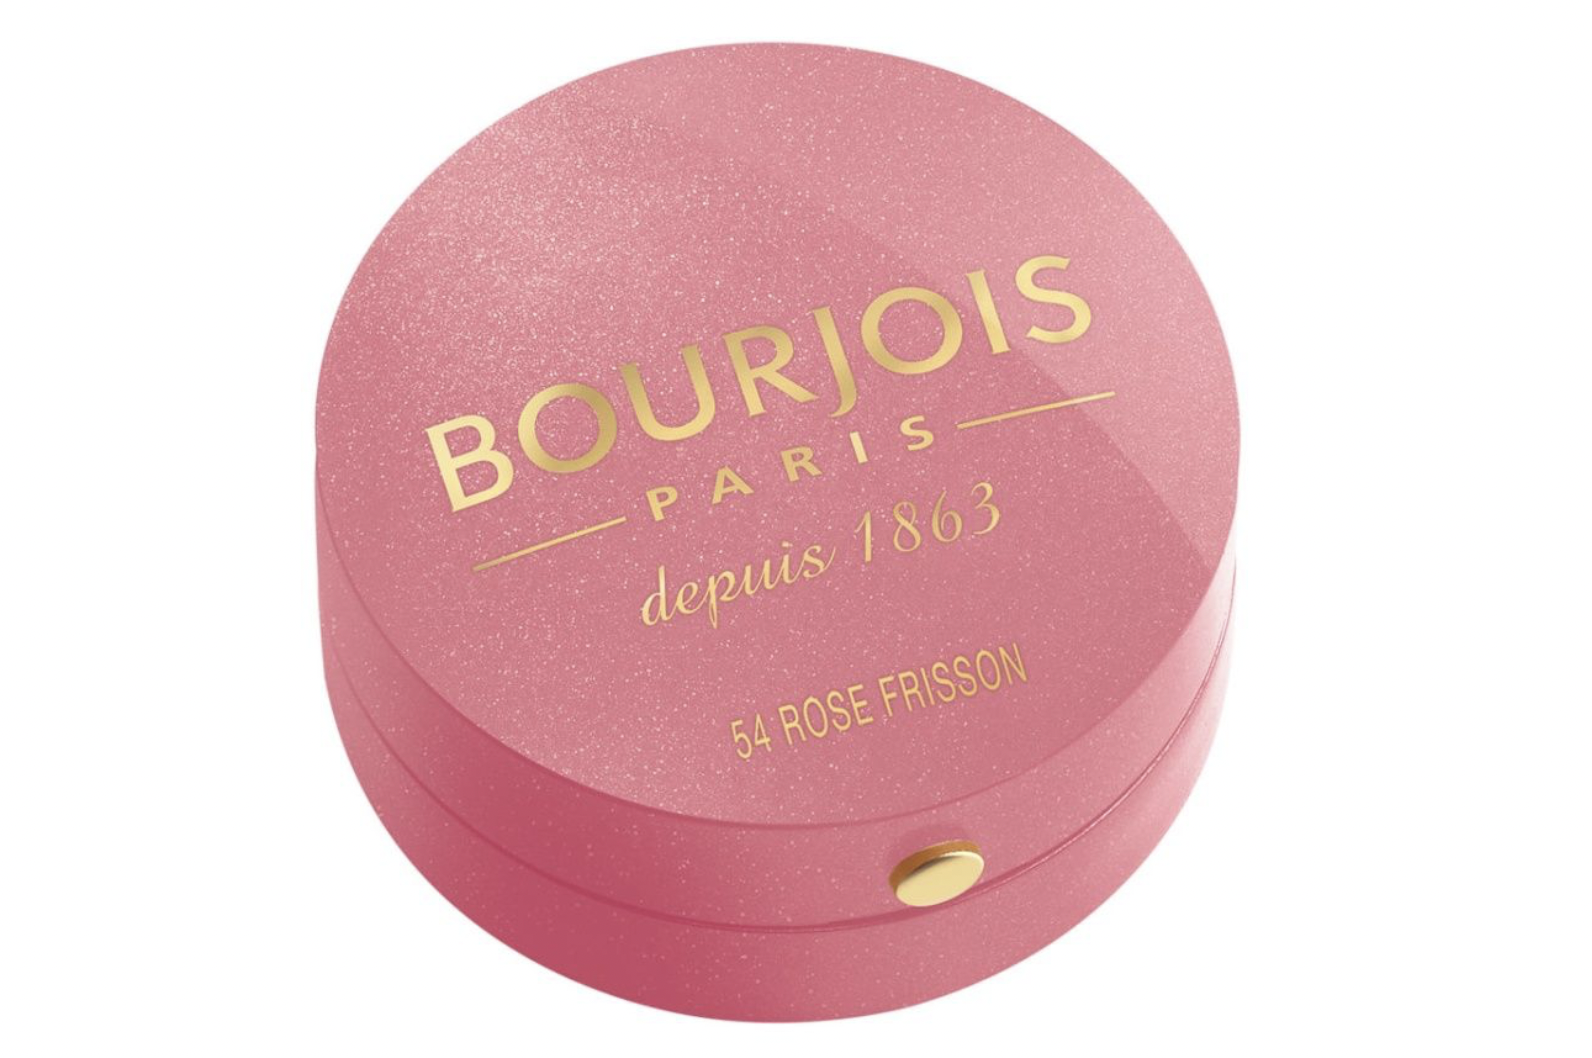    / Bourjois Paris -  Blusher  54 Rose Frisson 2,5 